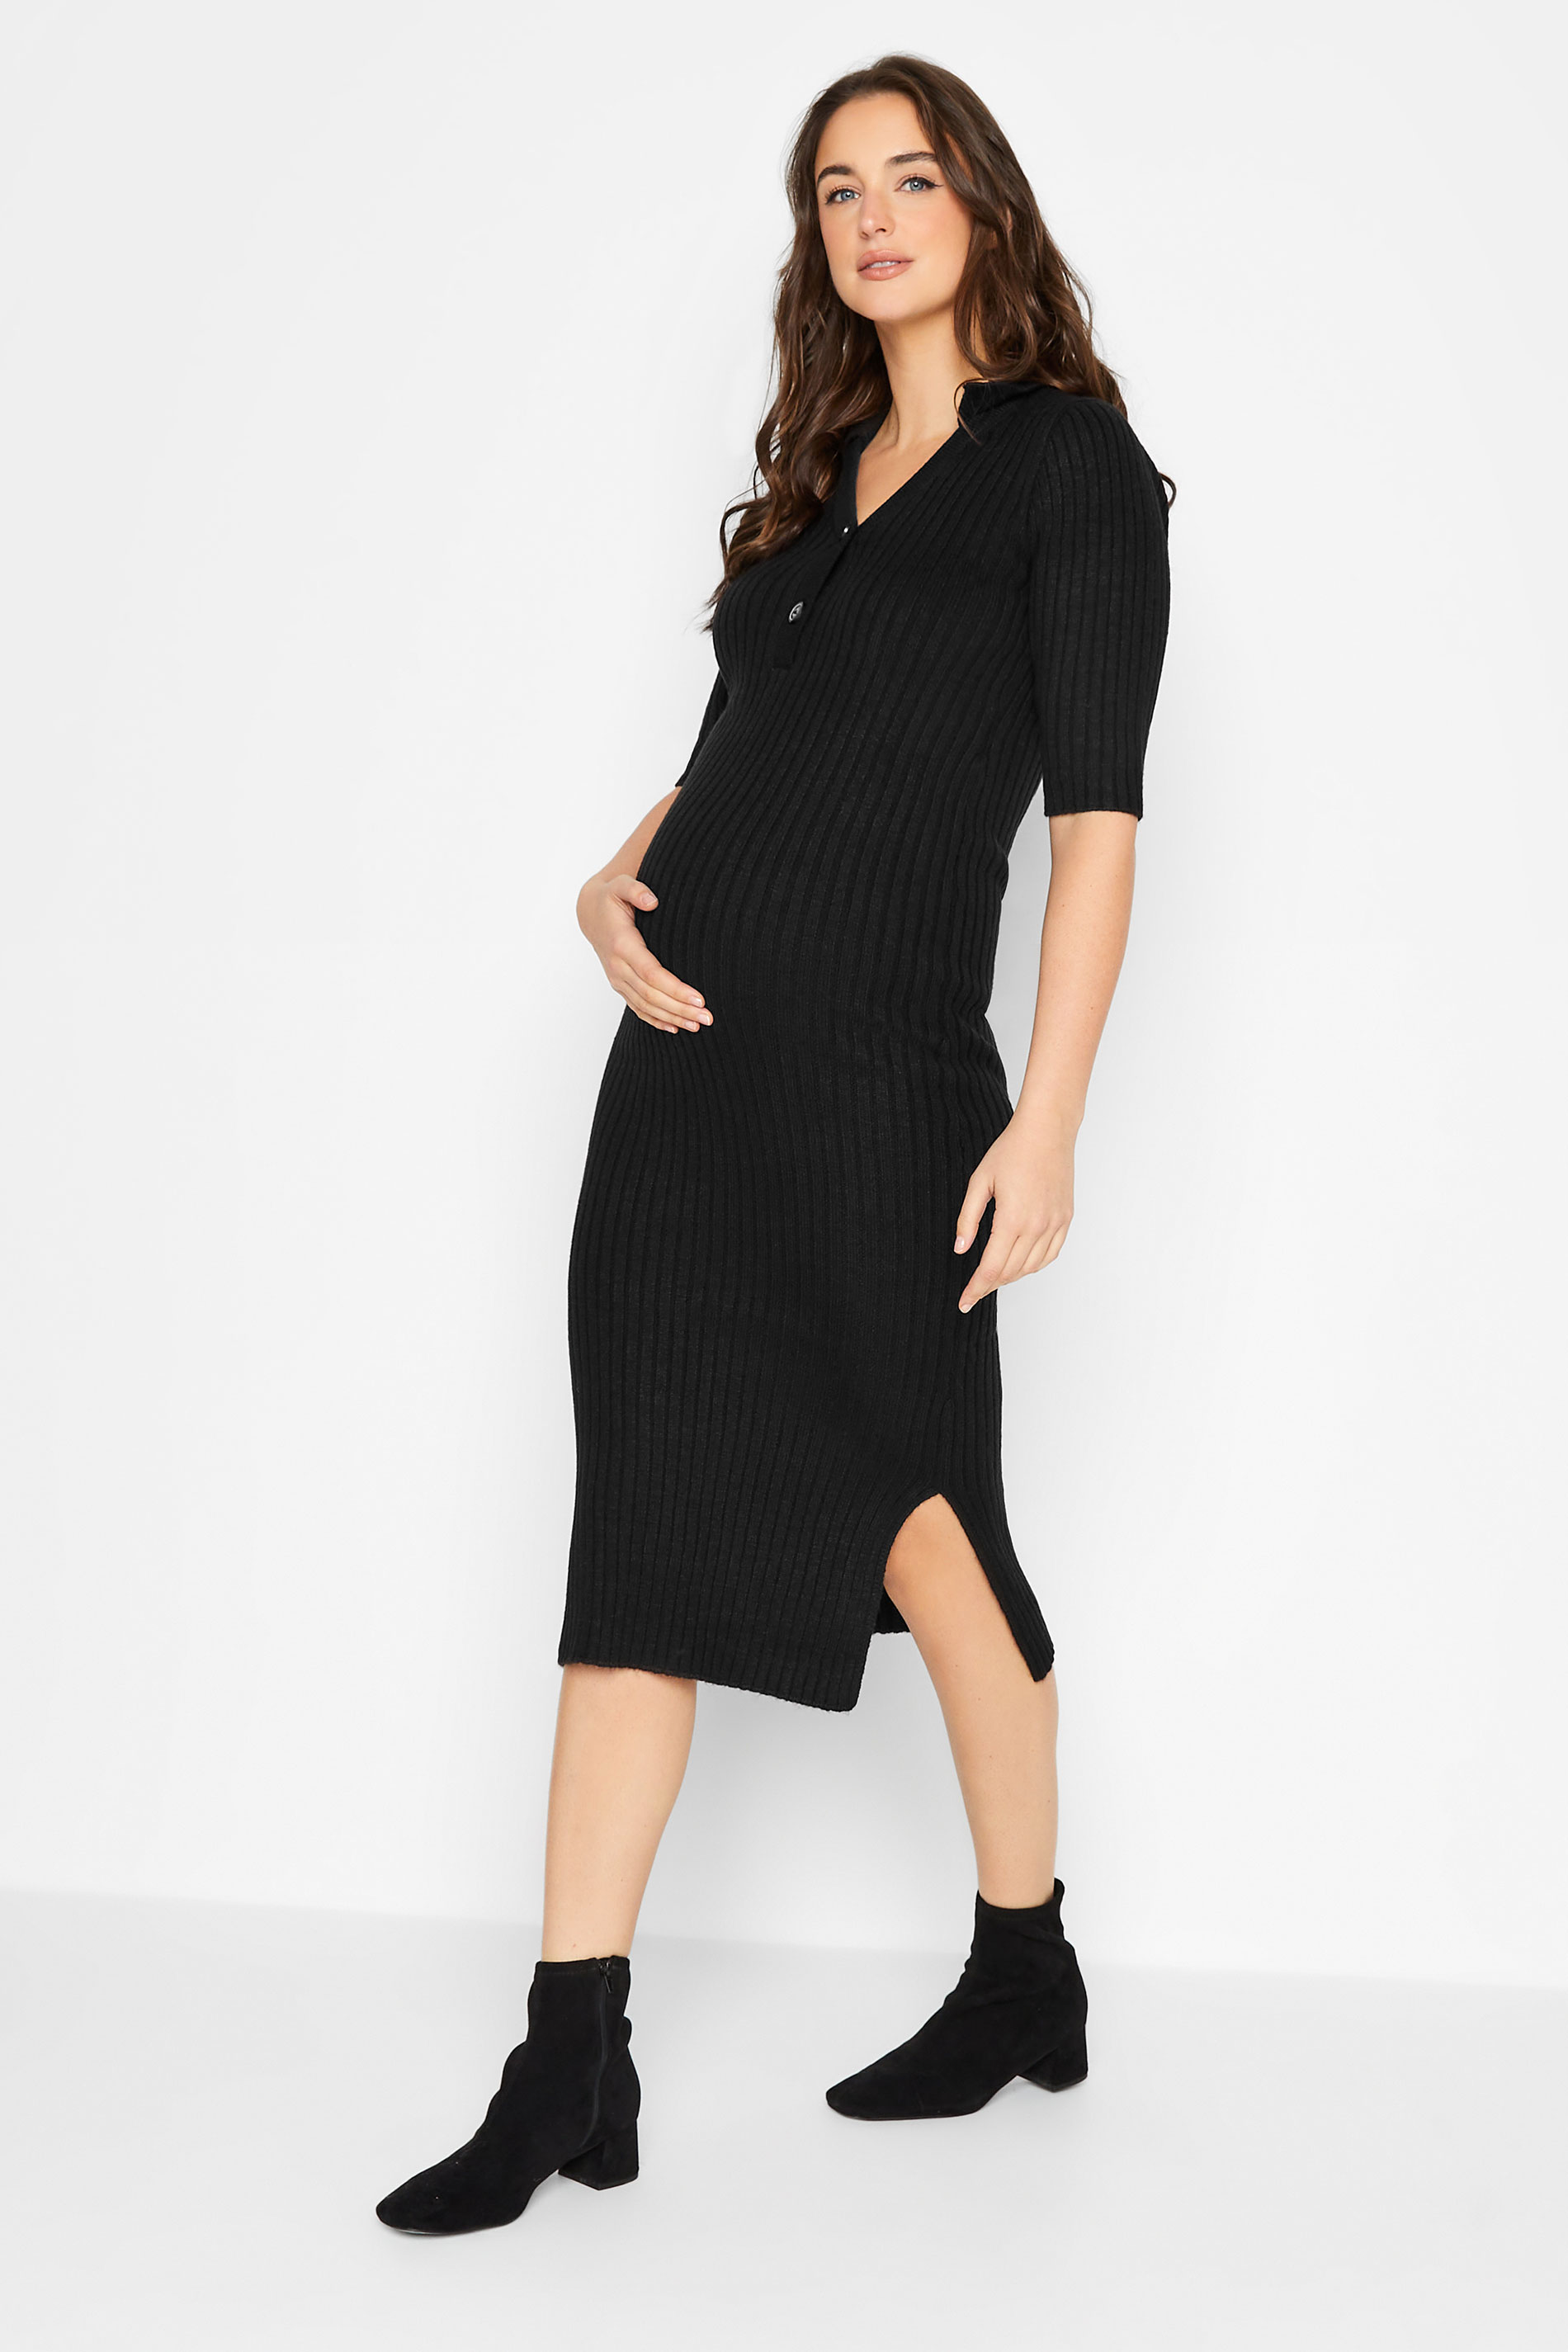 LTS Tall Women's Maternity Black Knitted Midaxi Dress | Long Tall Sally  1